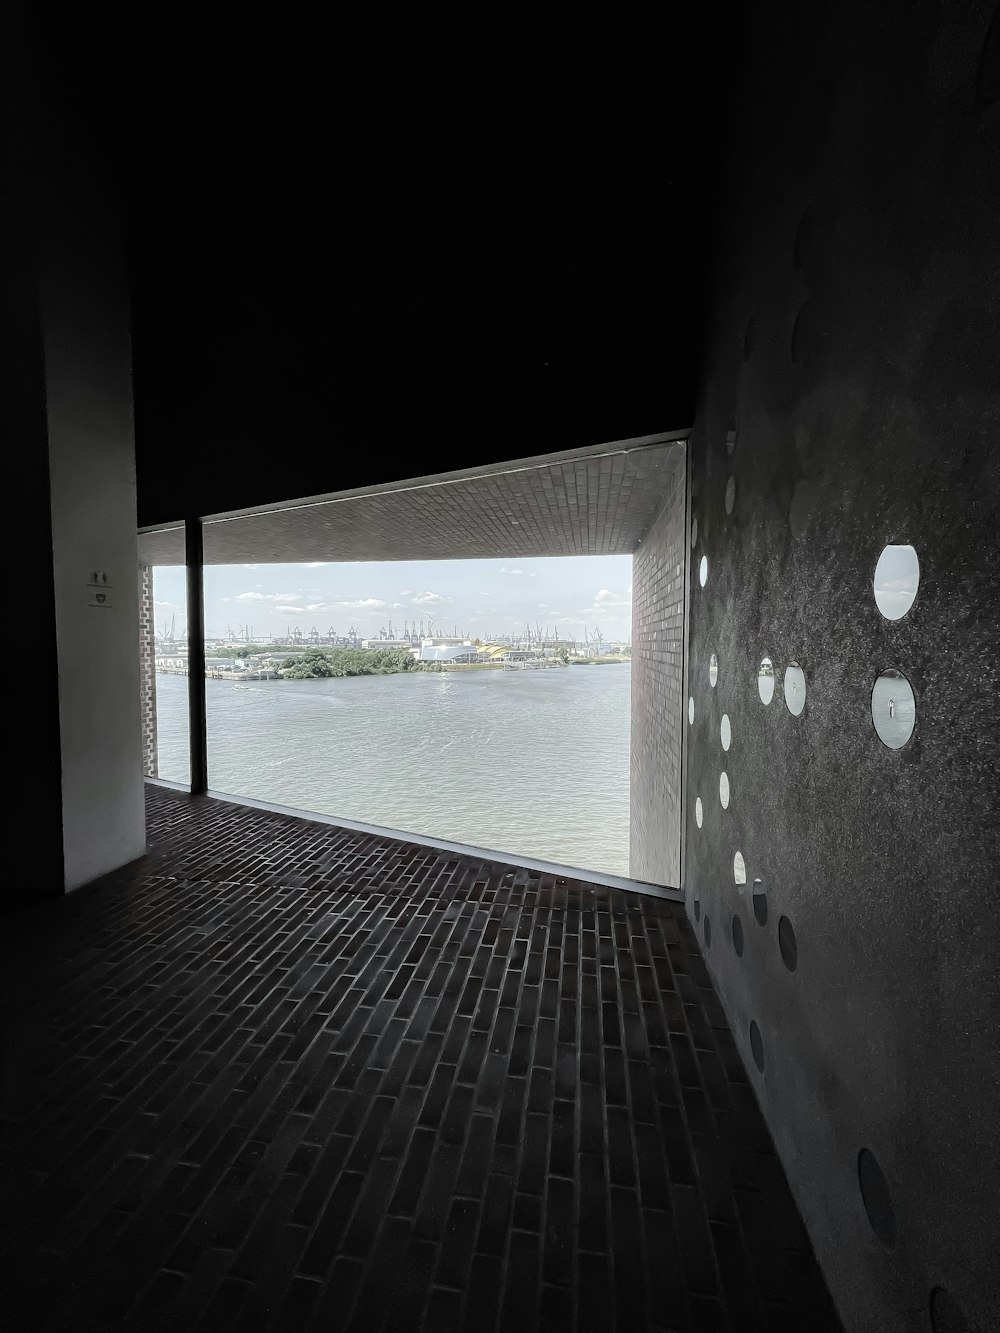 edifício de concreto preto e branco perto do corpo de água durante o dia